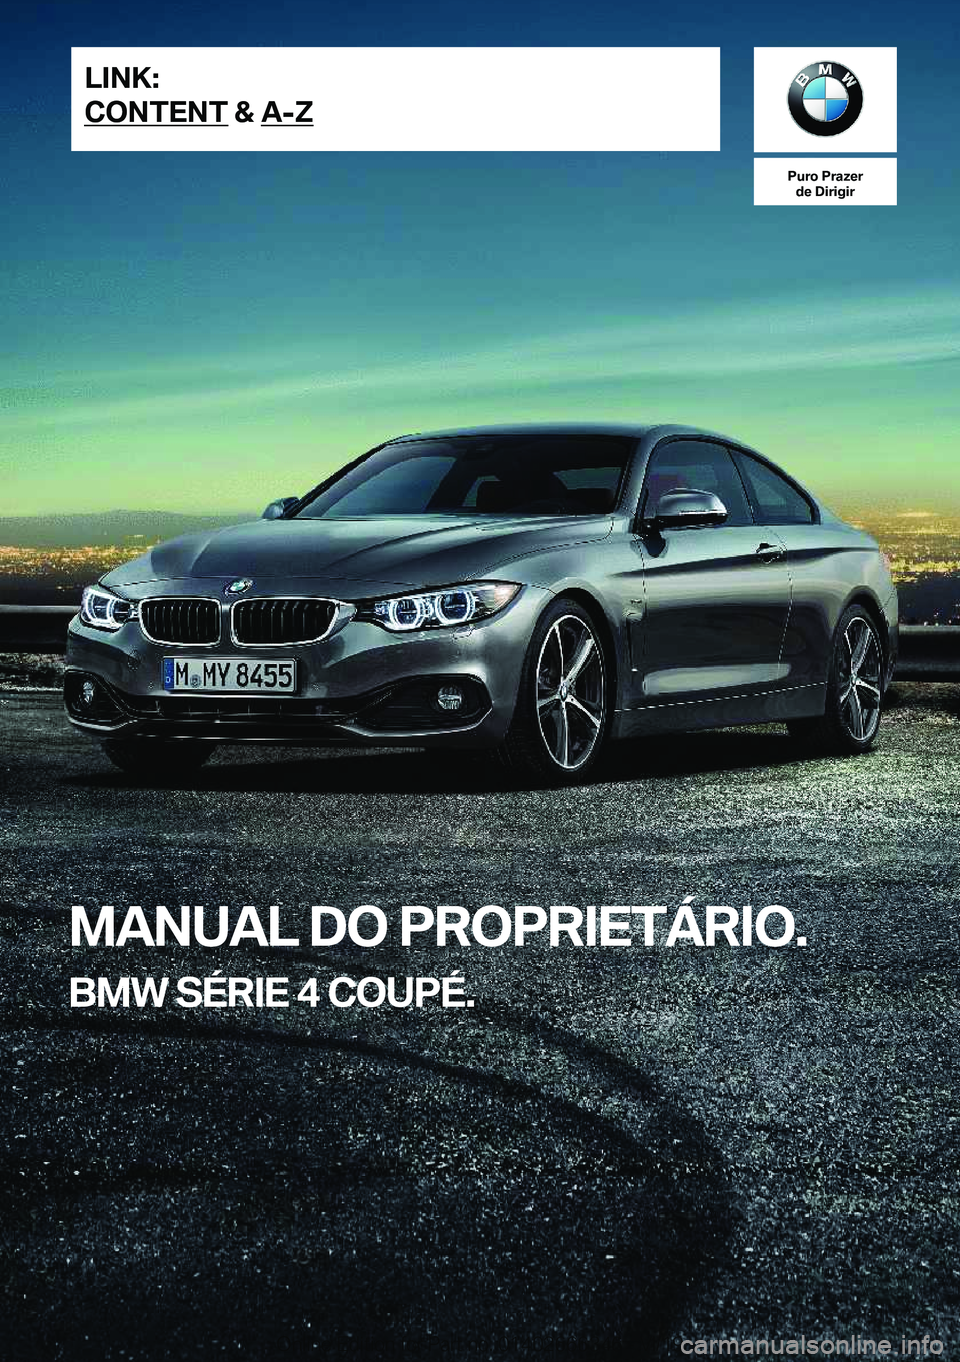 BMW 4 SERIES COUPE 2020  Manual do condutor (in Portuguese) �P�u�r�o��P�r�a�z�e�r�d�e��D�i�r�i�g�i�r
�M�A�N�U�A�L��D�O��P�R�O�P�R�I�E�T�Á�R�I�O�.
�B�M�W��S�